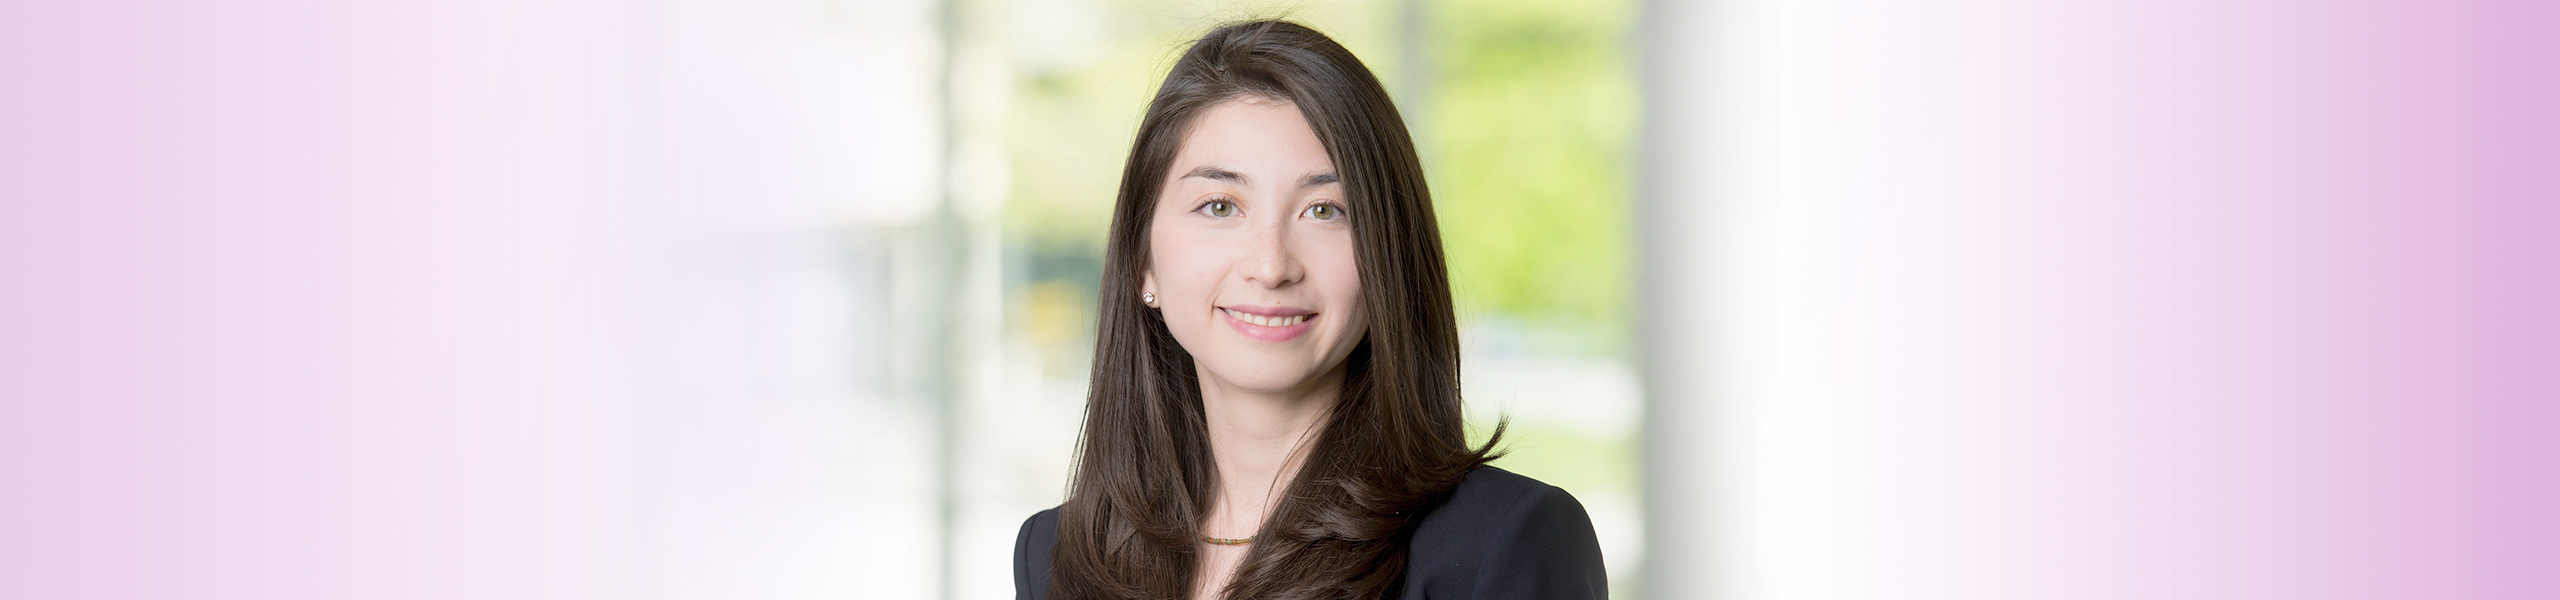 Charlotte Ruf Senior Consultant at Allianz Inhouse Consulting